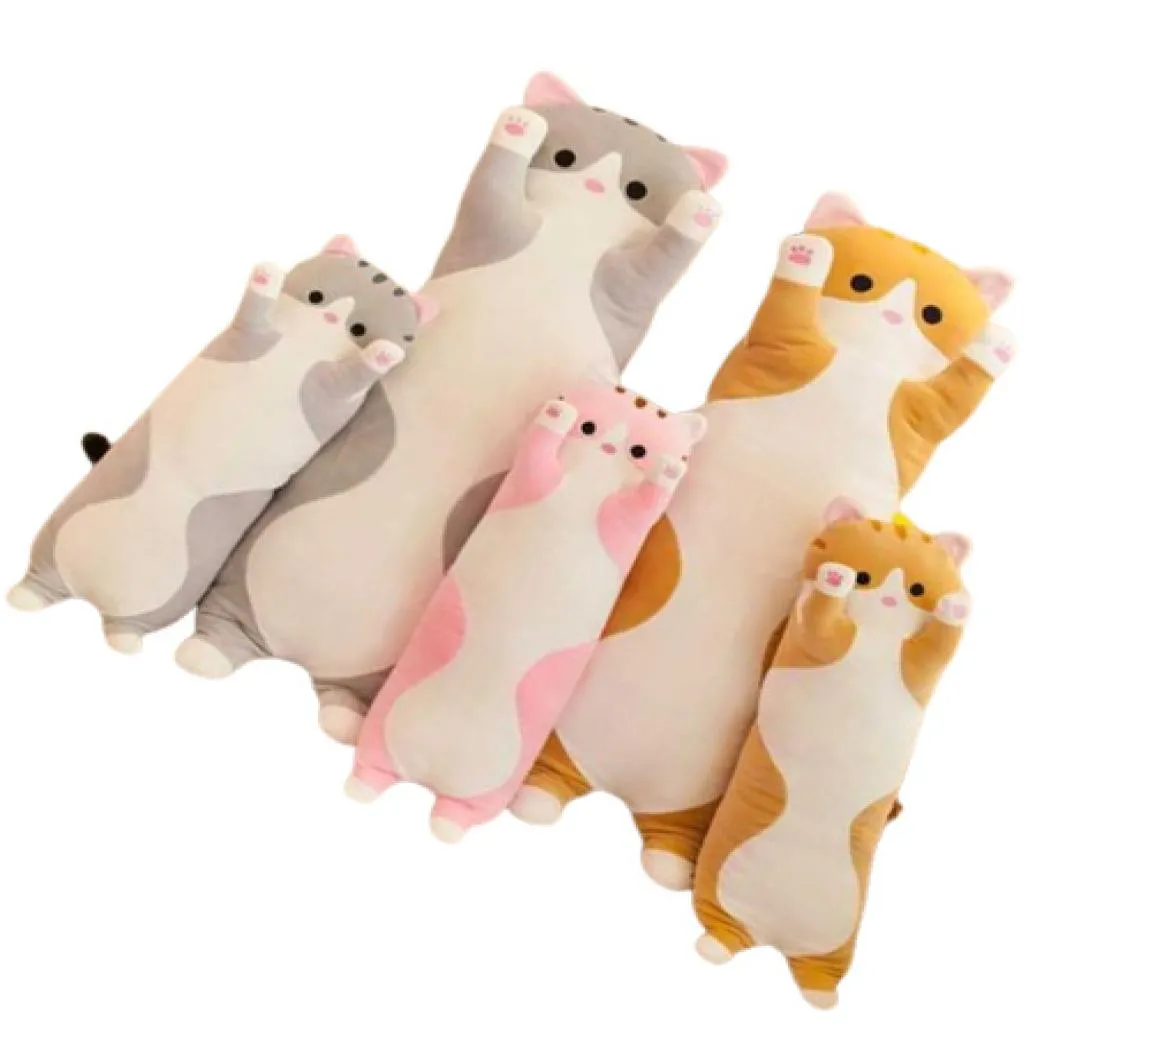 50130cm Toys en peluche chat Animal mignon créatif long Bureau Soft Break Nap Sleeping Cushion Cushion Gift Gift For Kids 2202104815947